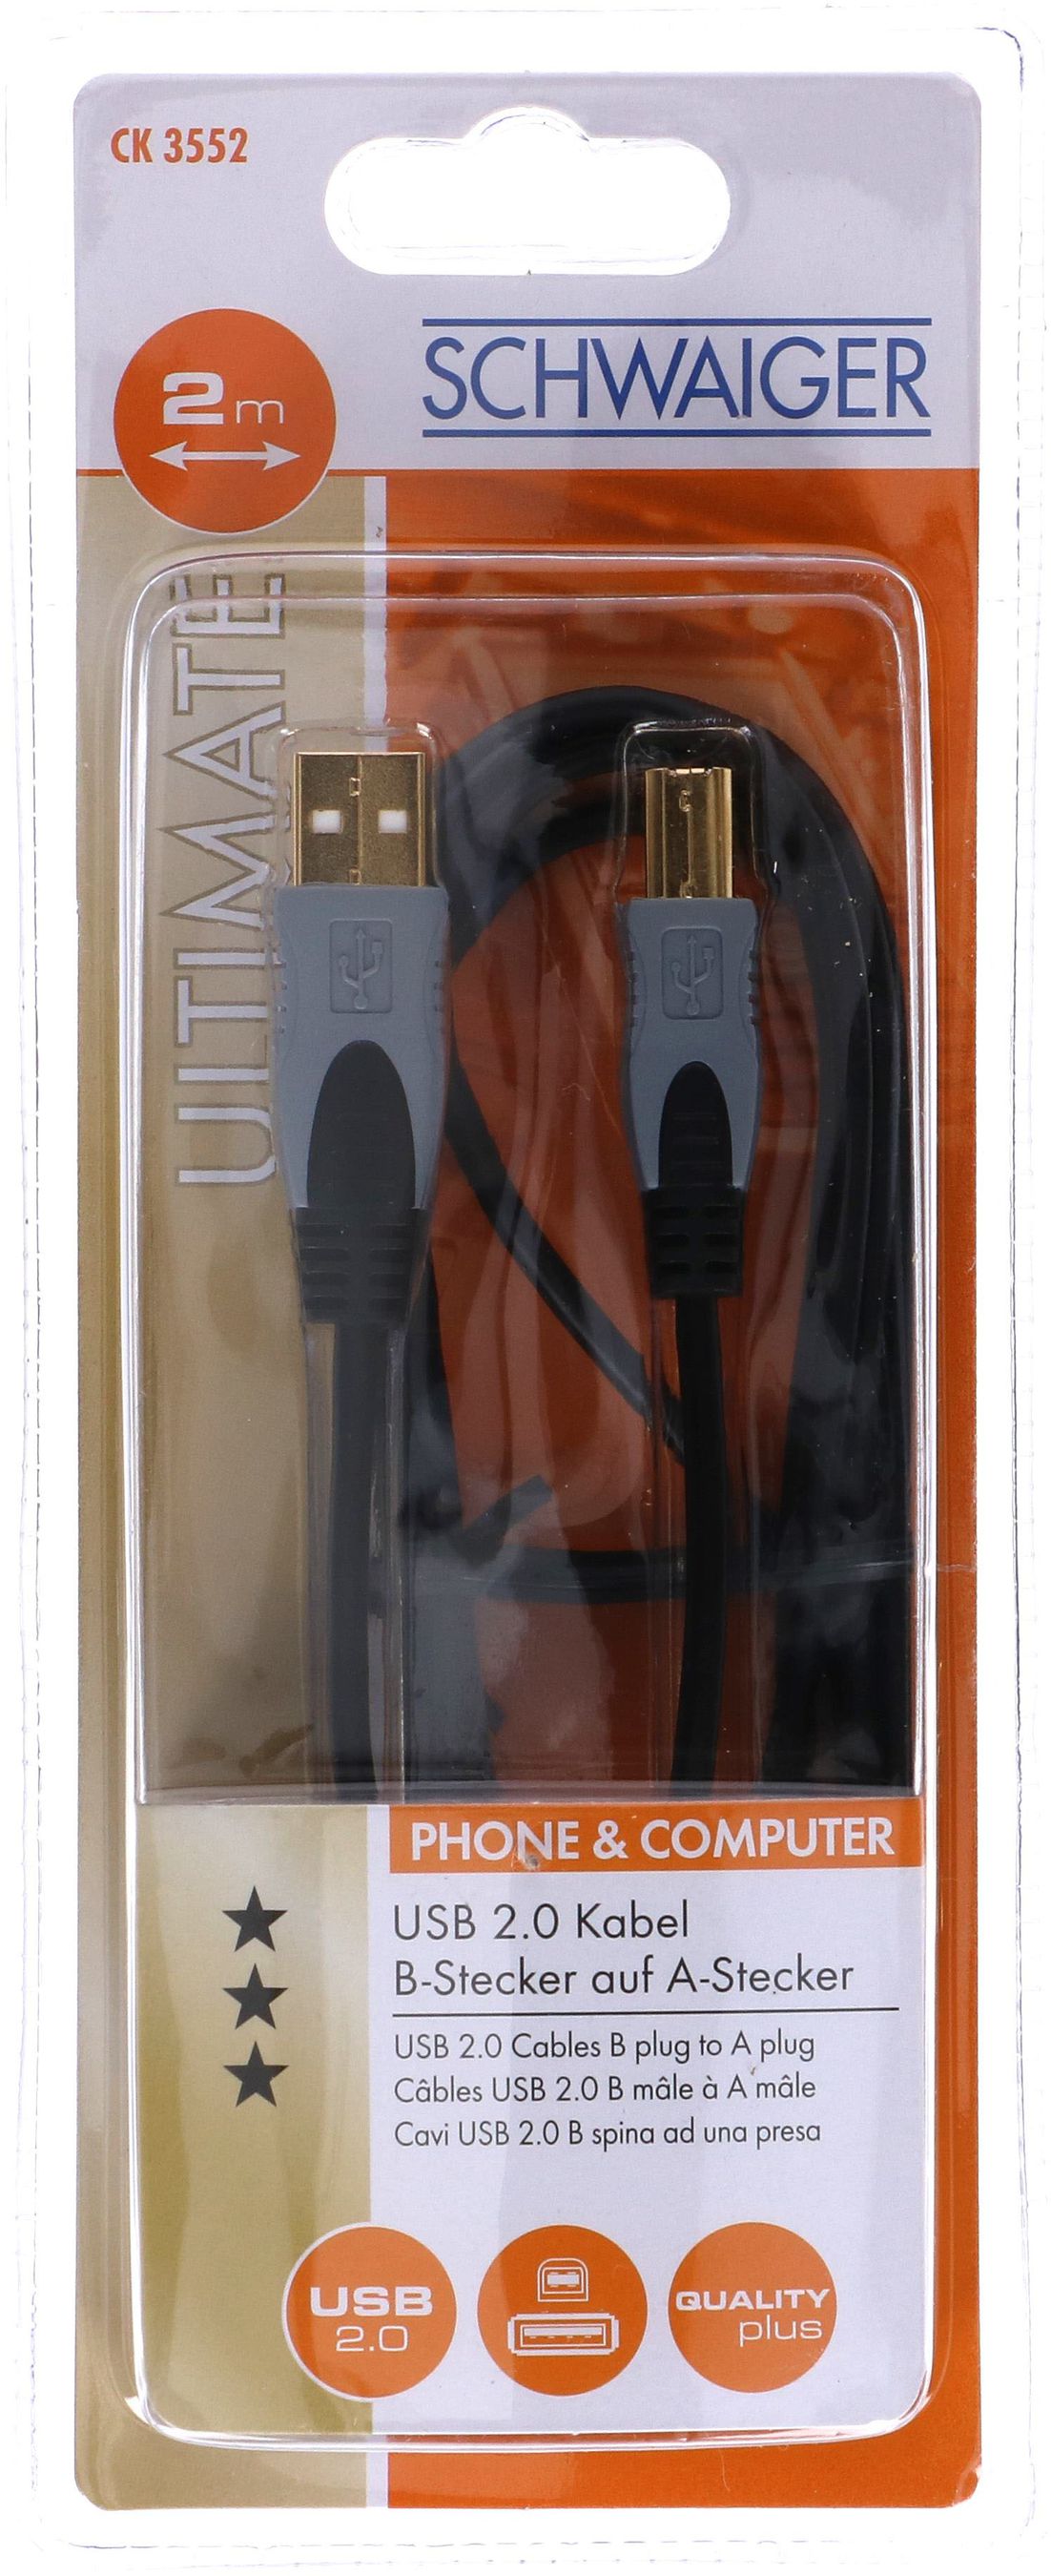 USB 2.0 Kabel HQ 2.0m schwarz